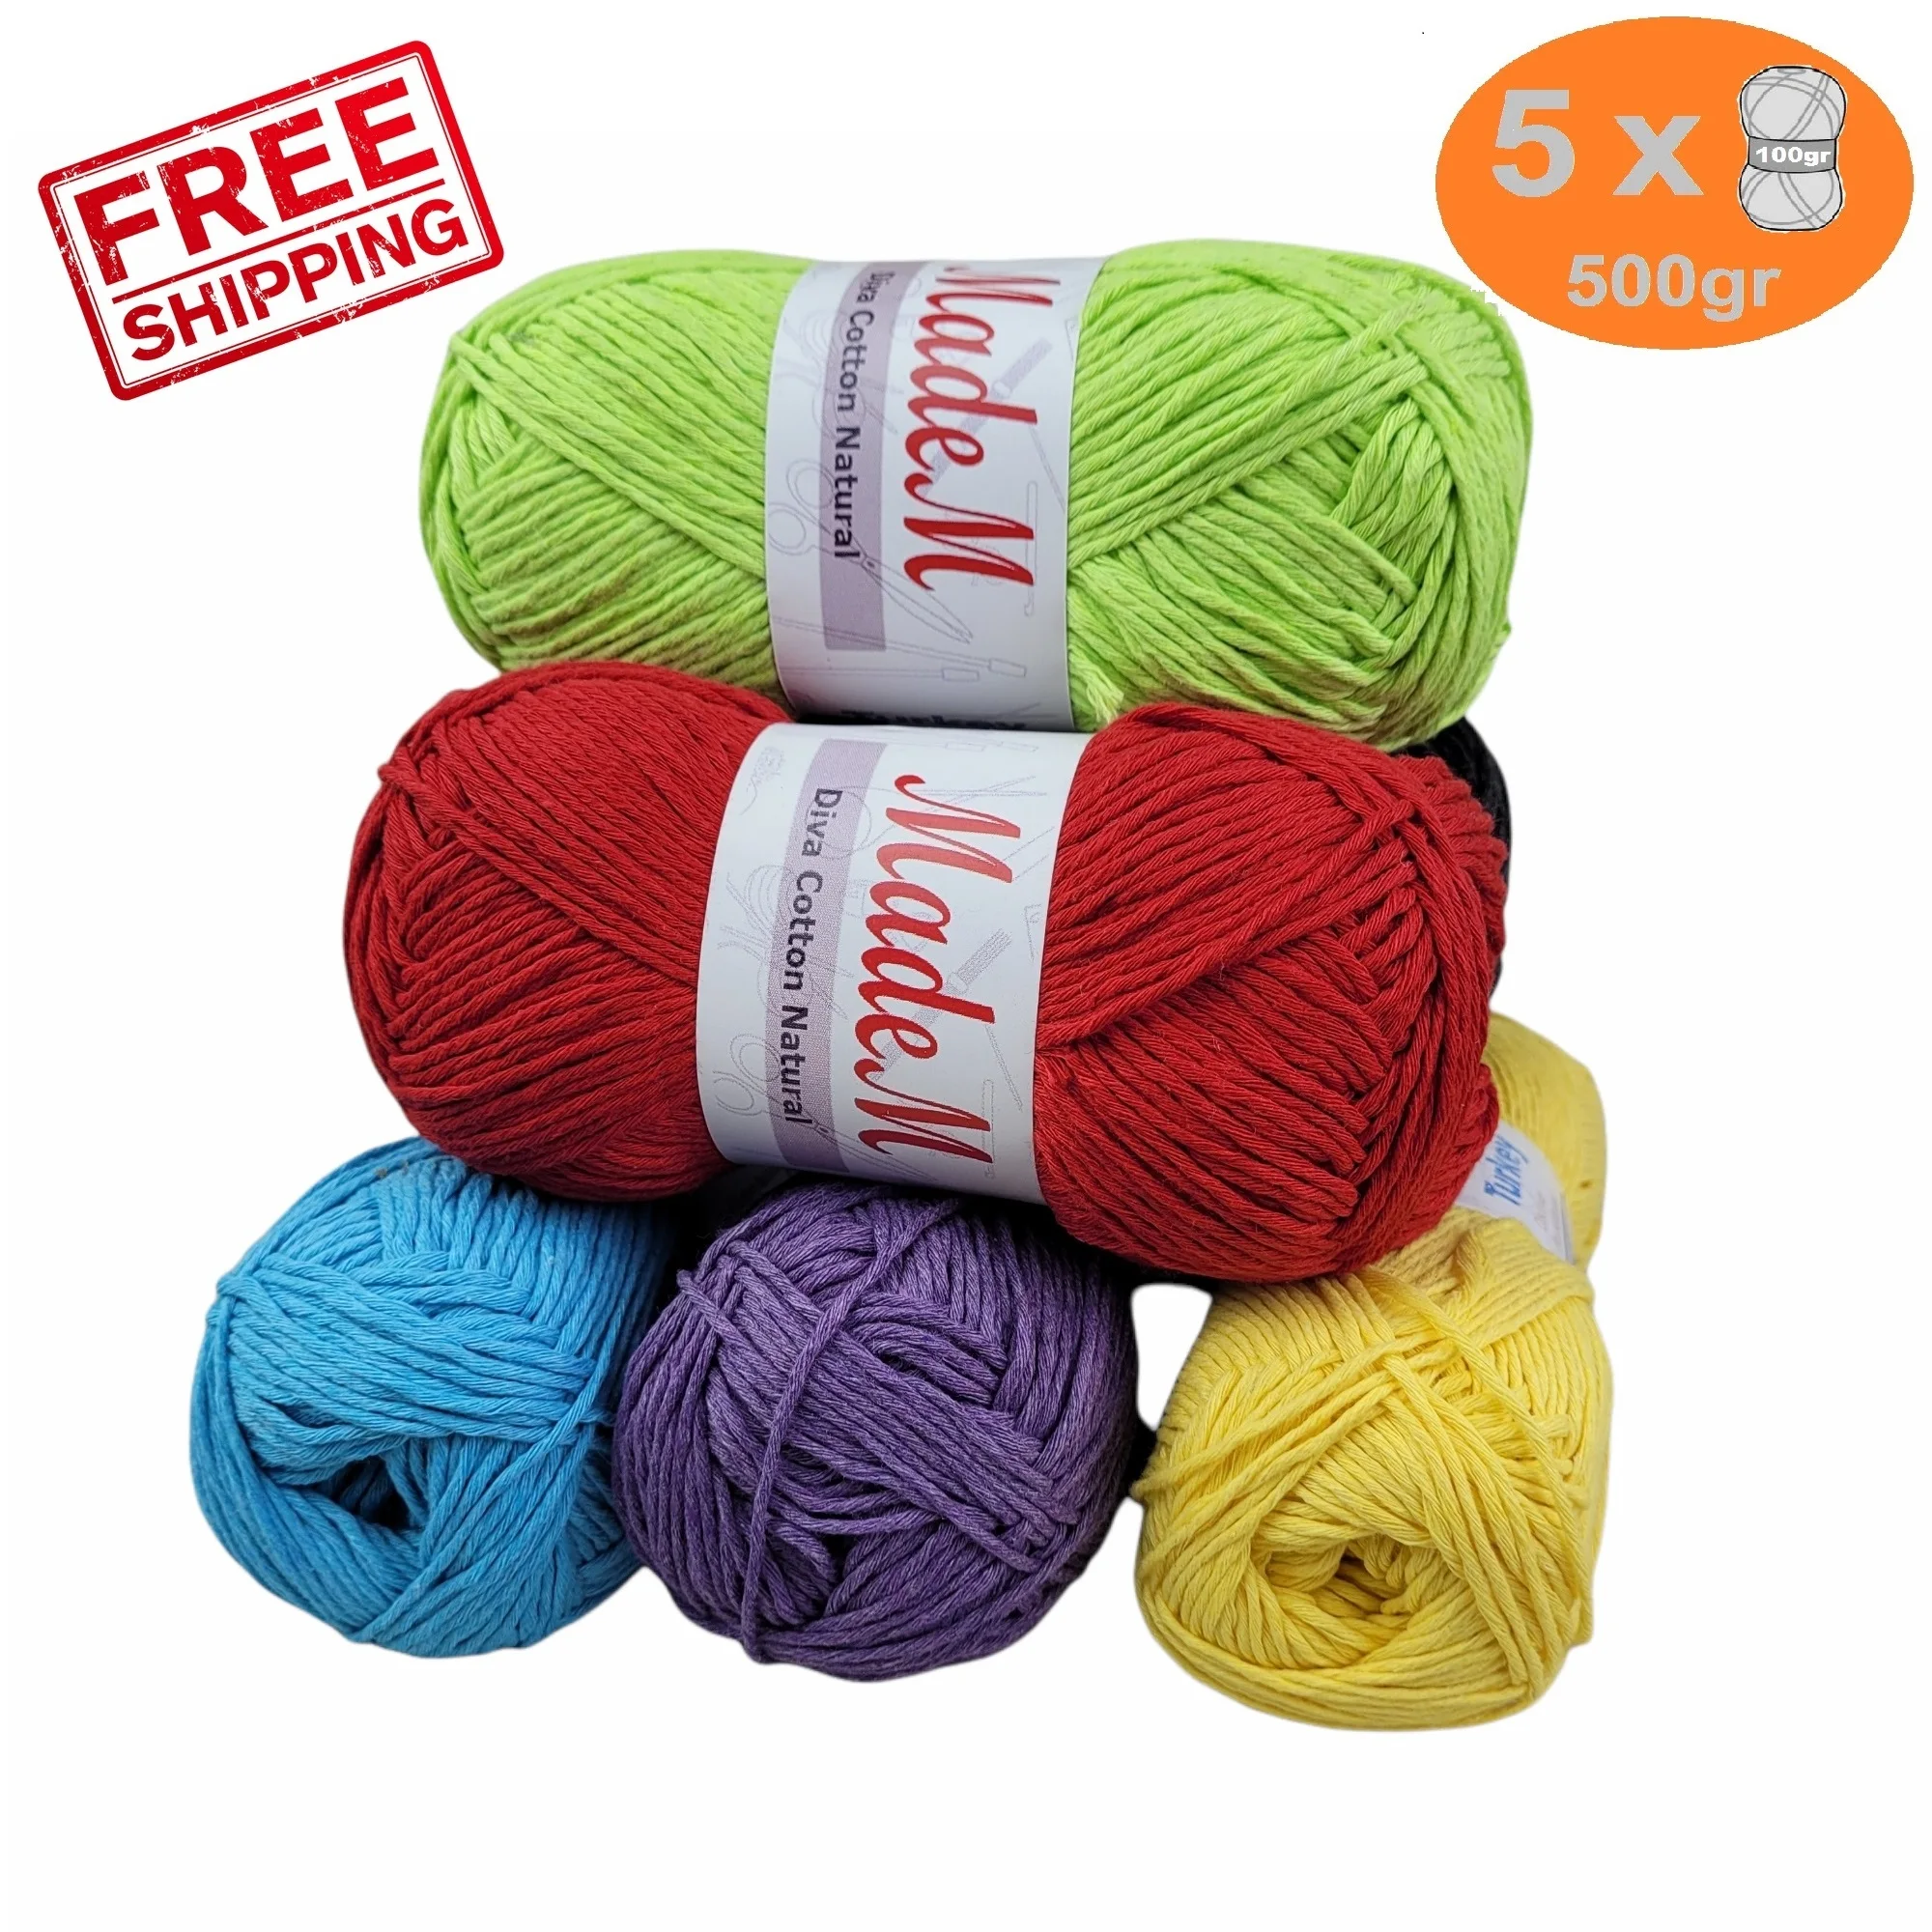 

MadeM Diva Cotton Natural Yarn 5x100gr-200mt Hand Knitting Crochet Thread Strand %100Cotton Soft Baby Blanket Cardigan Amigurumi